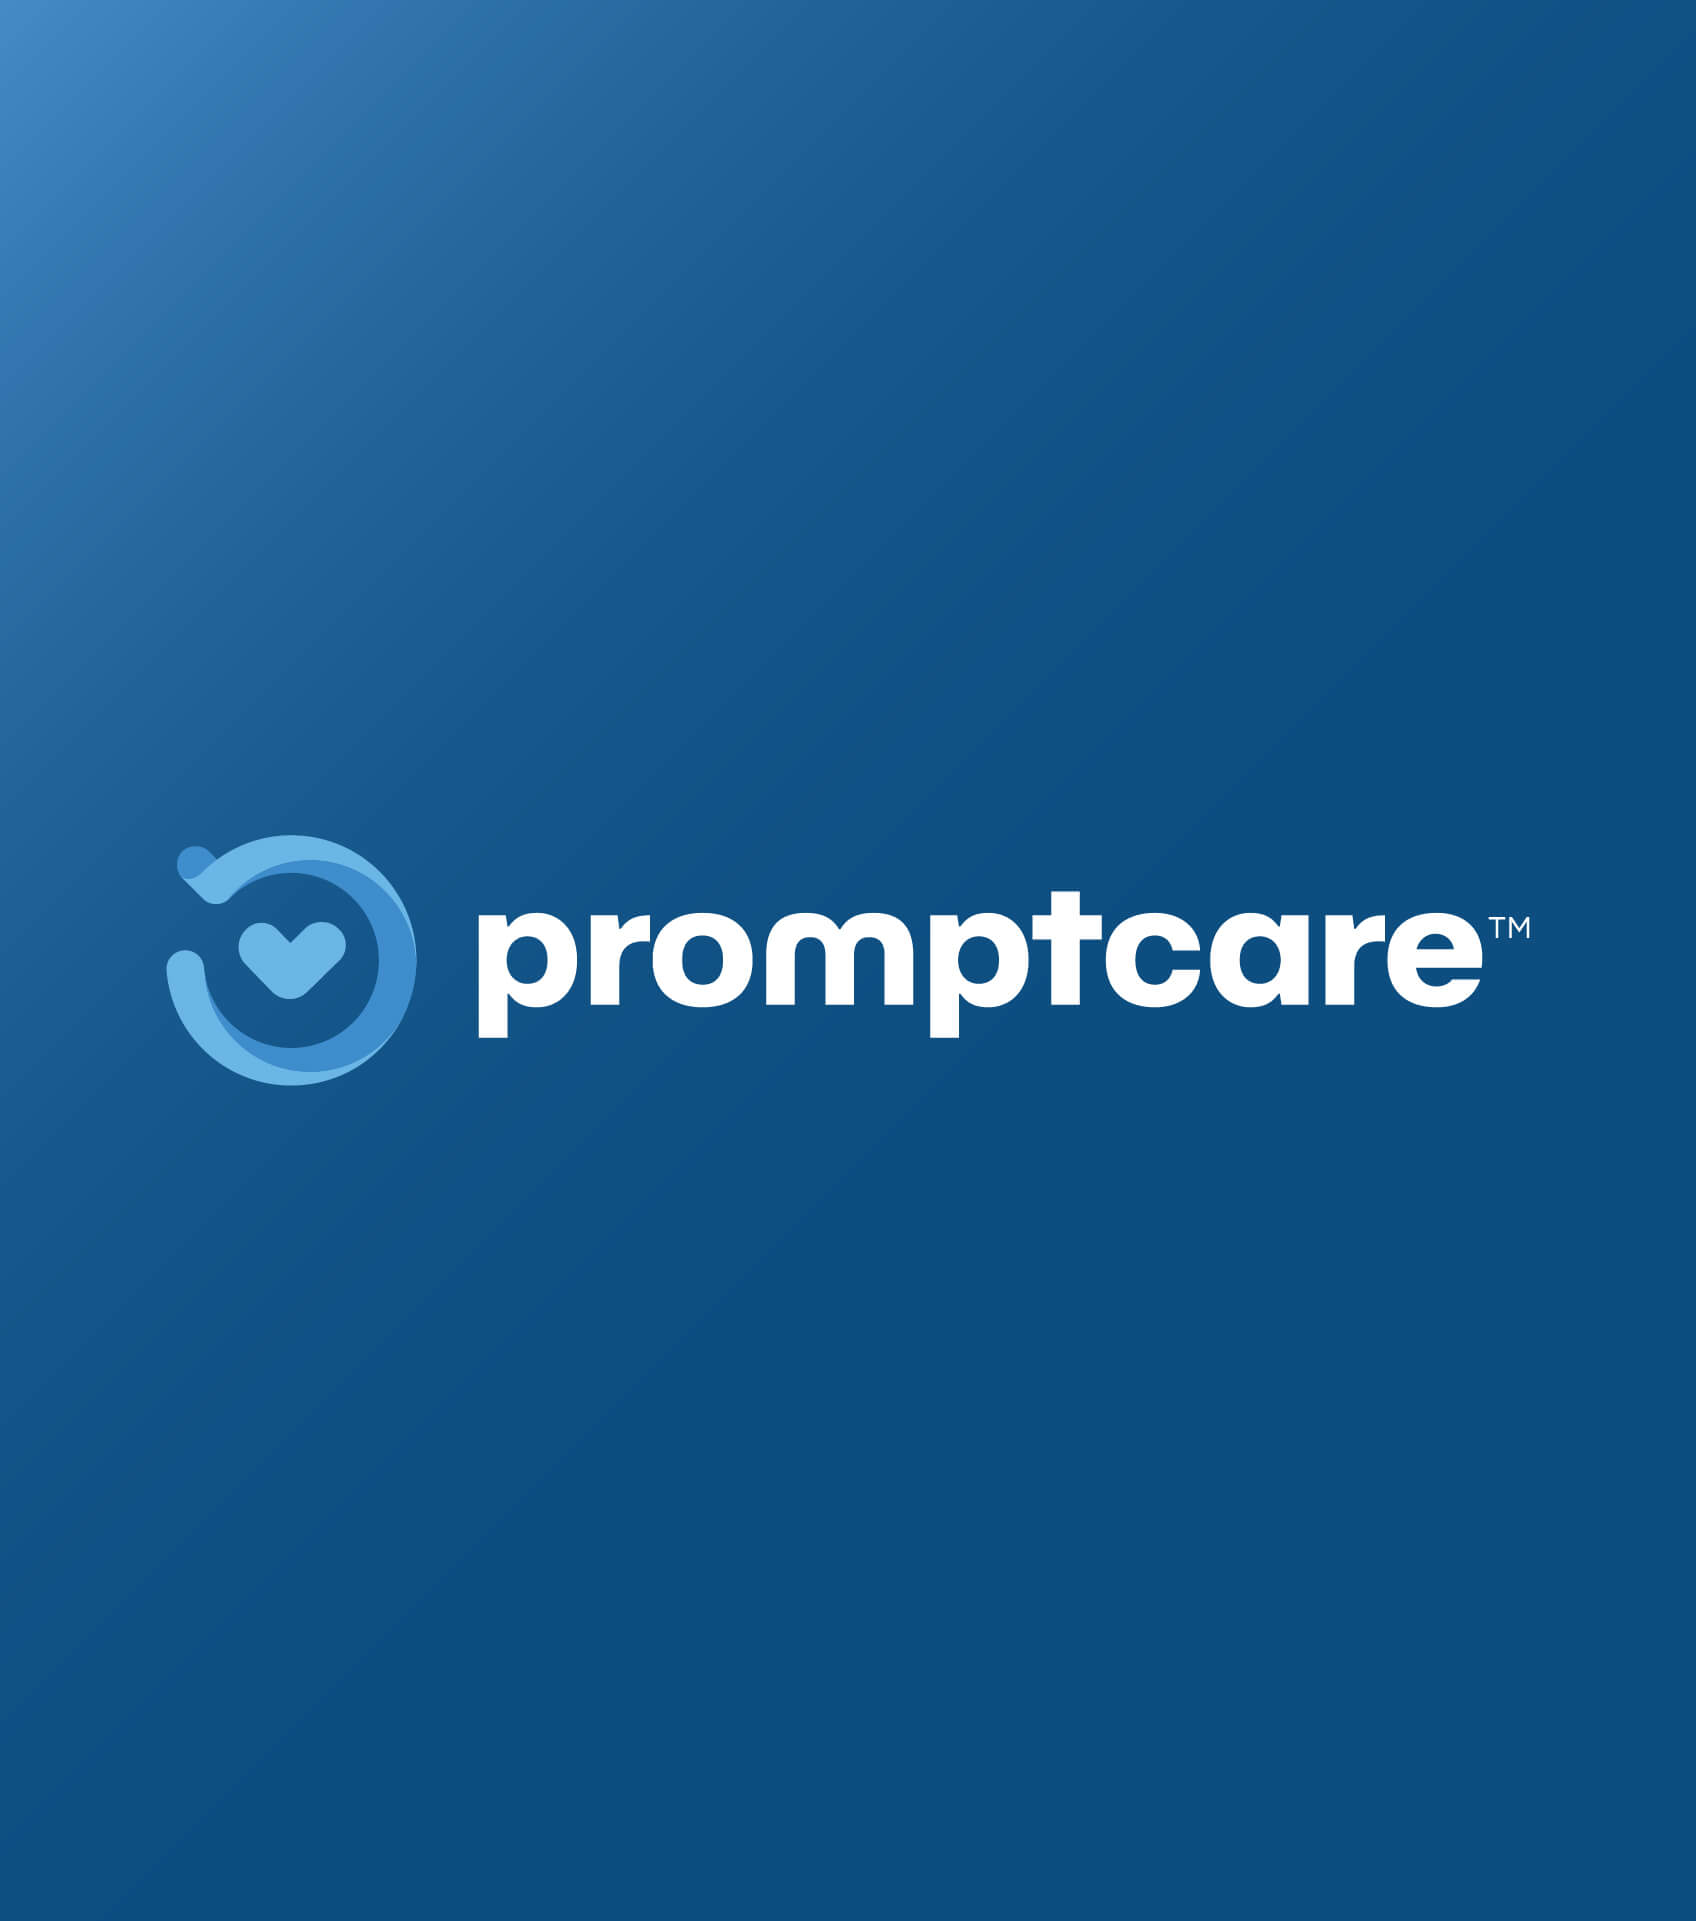 PromptCare Announces New Brand Transformation